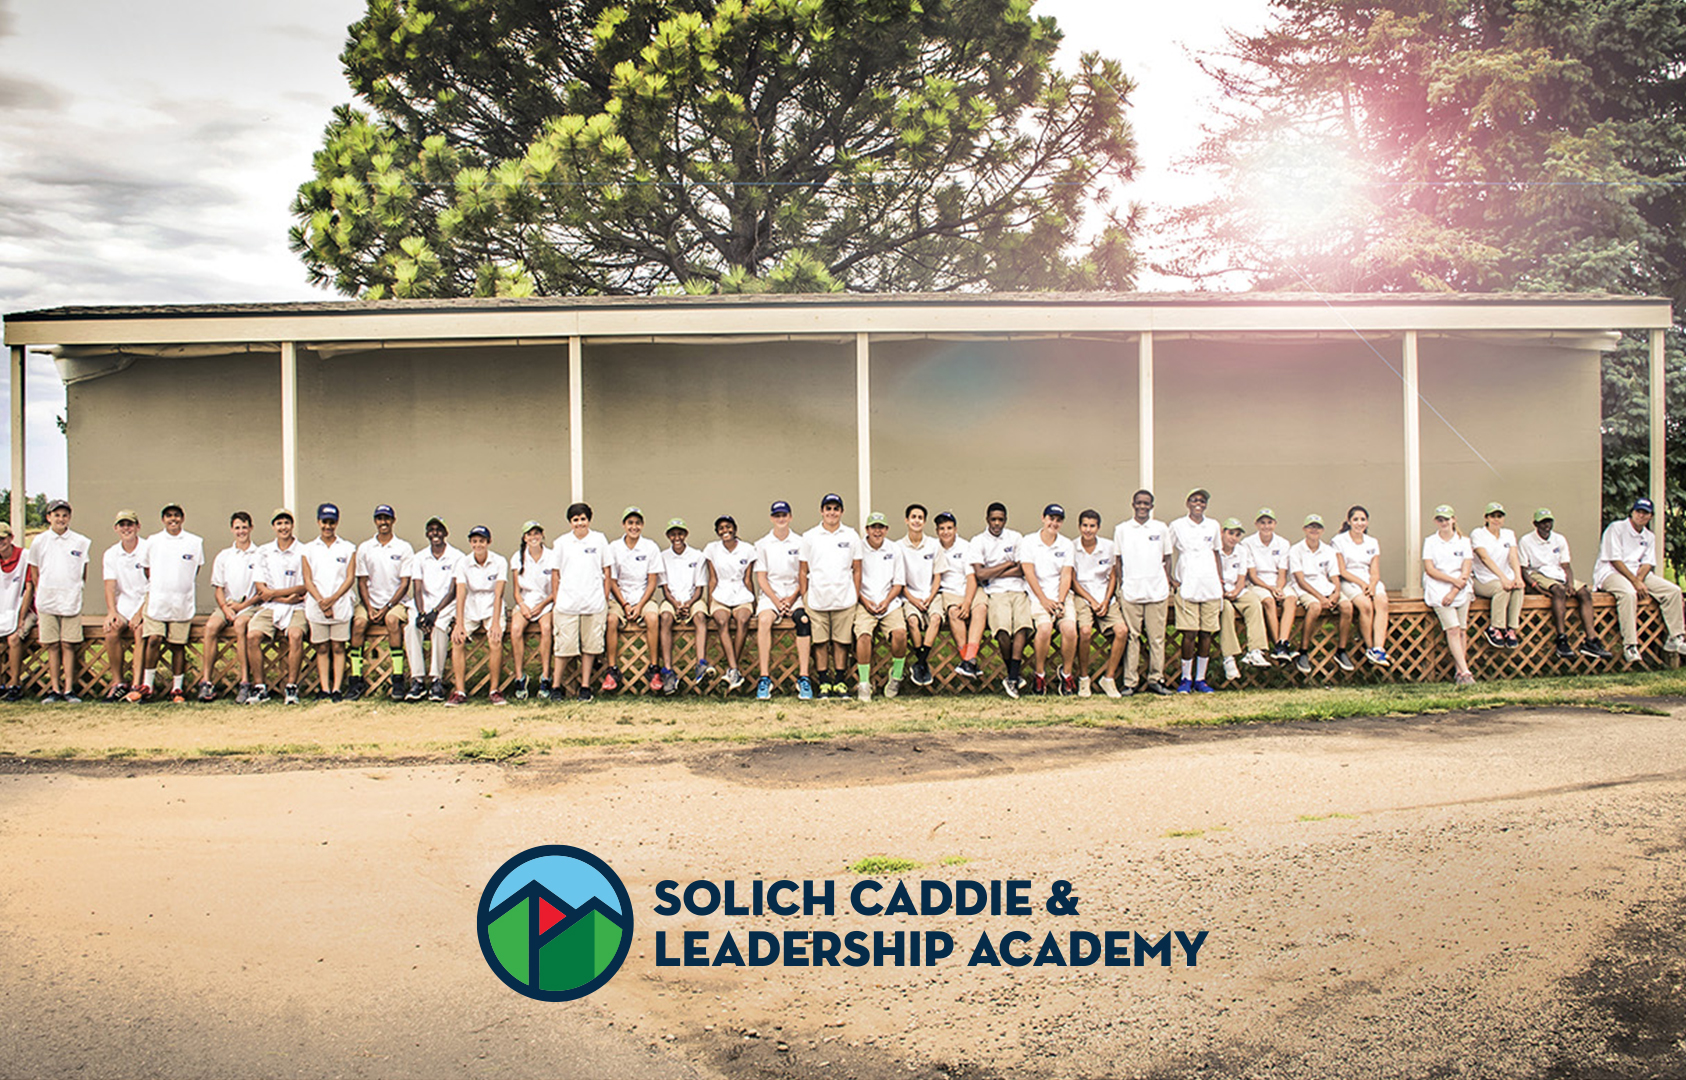 Solich Caddie & Leadership Academy